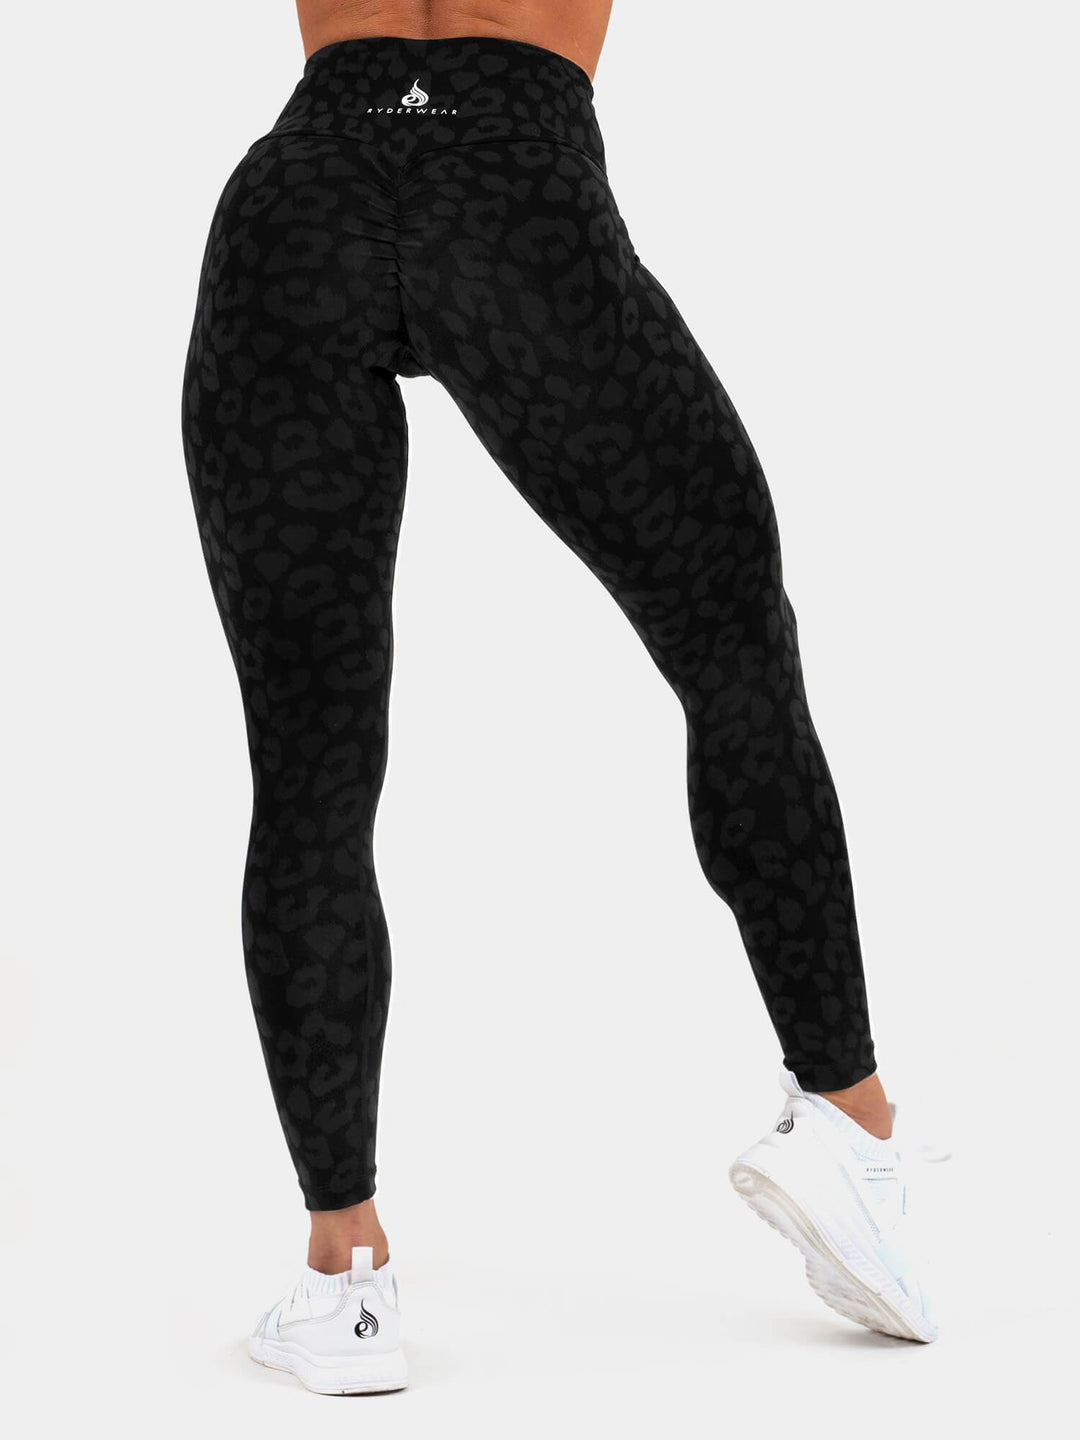 Instinct Scrunch Bum Leggings - Leopard Black Clothing Ryderwear 